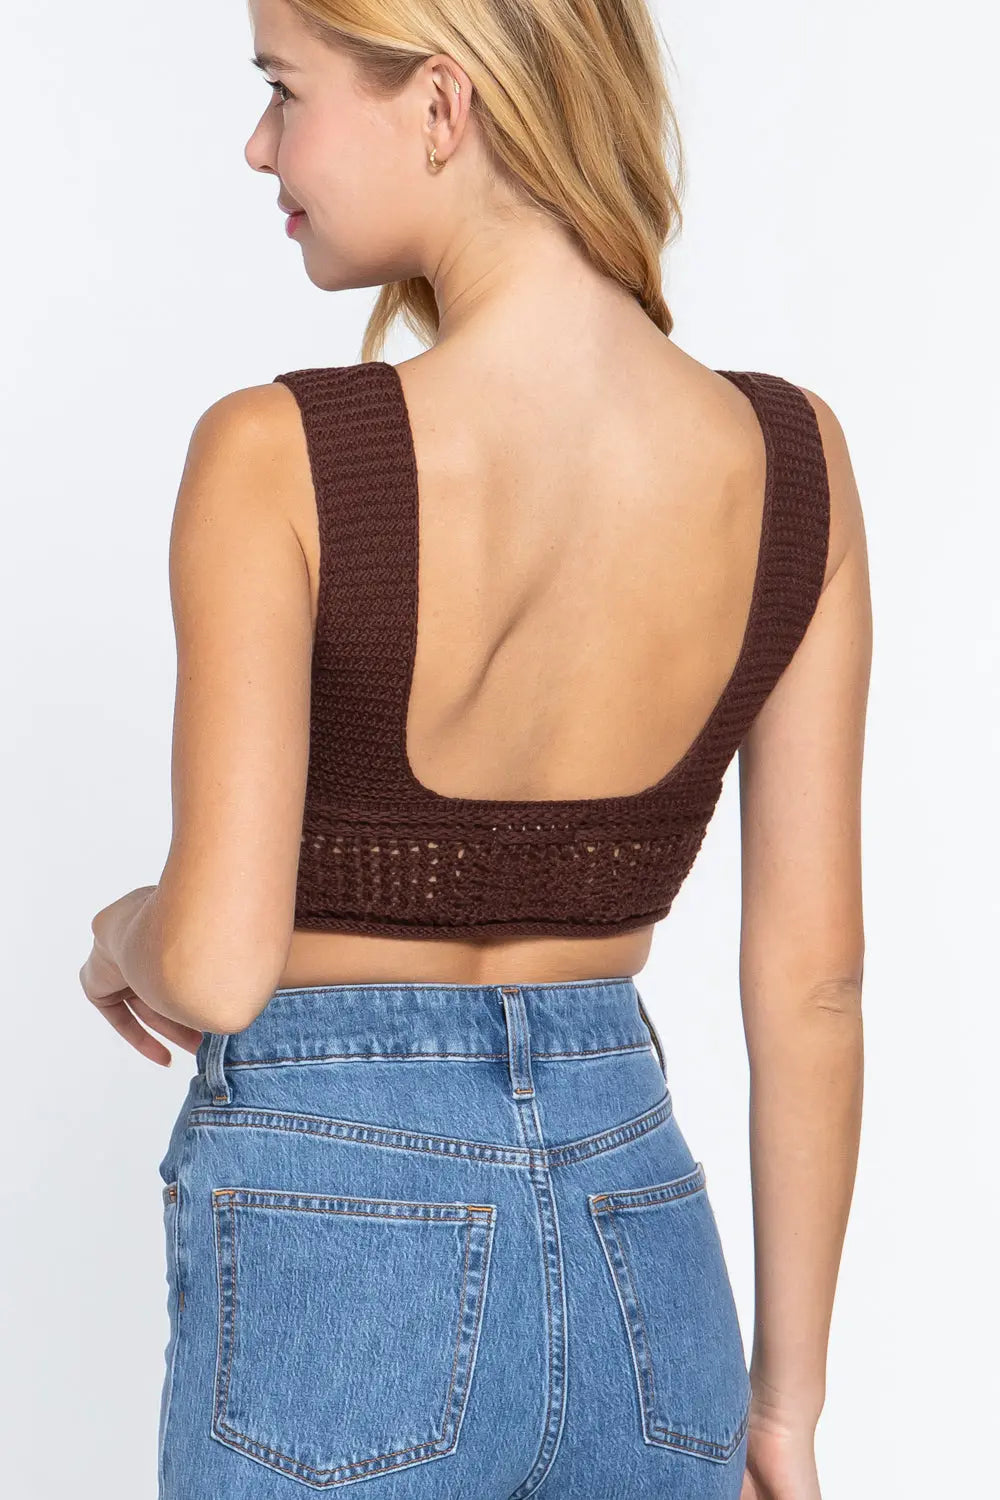 Textured Crop Sweater Tank Top Sunny EvE Fashion